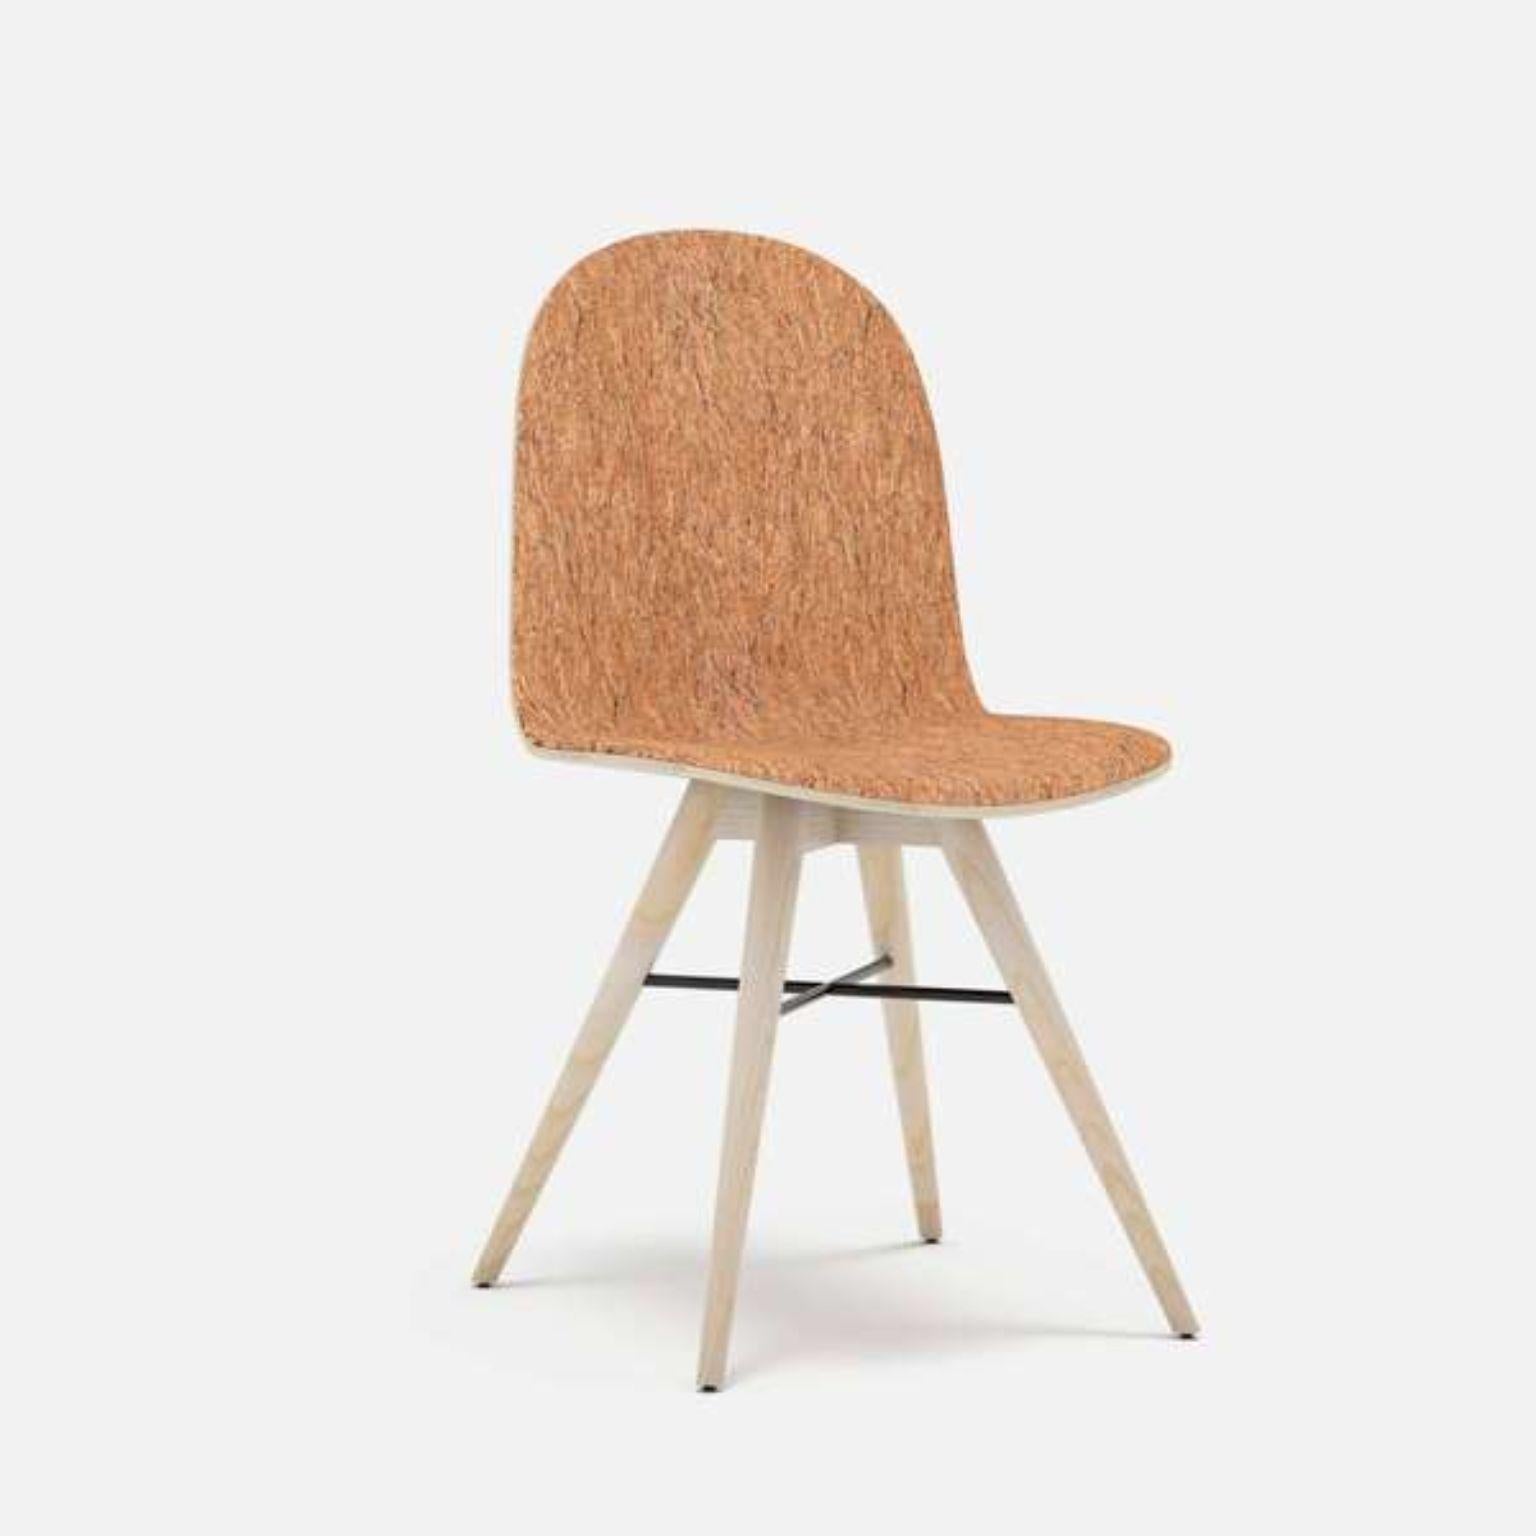 Solid American Walnut Contemporary Chair by Alexandre Caldas 3